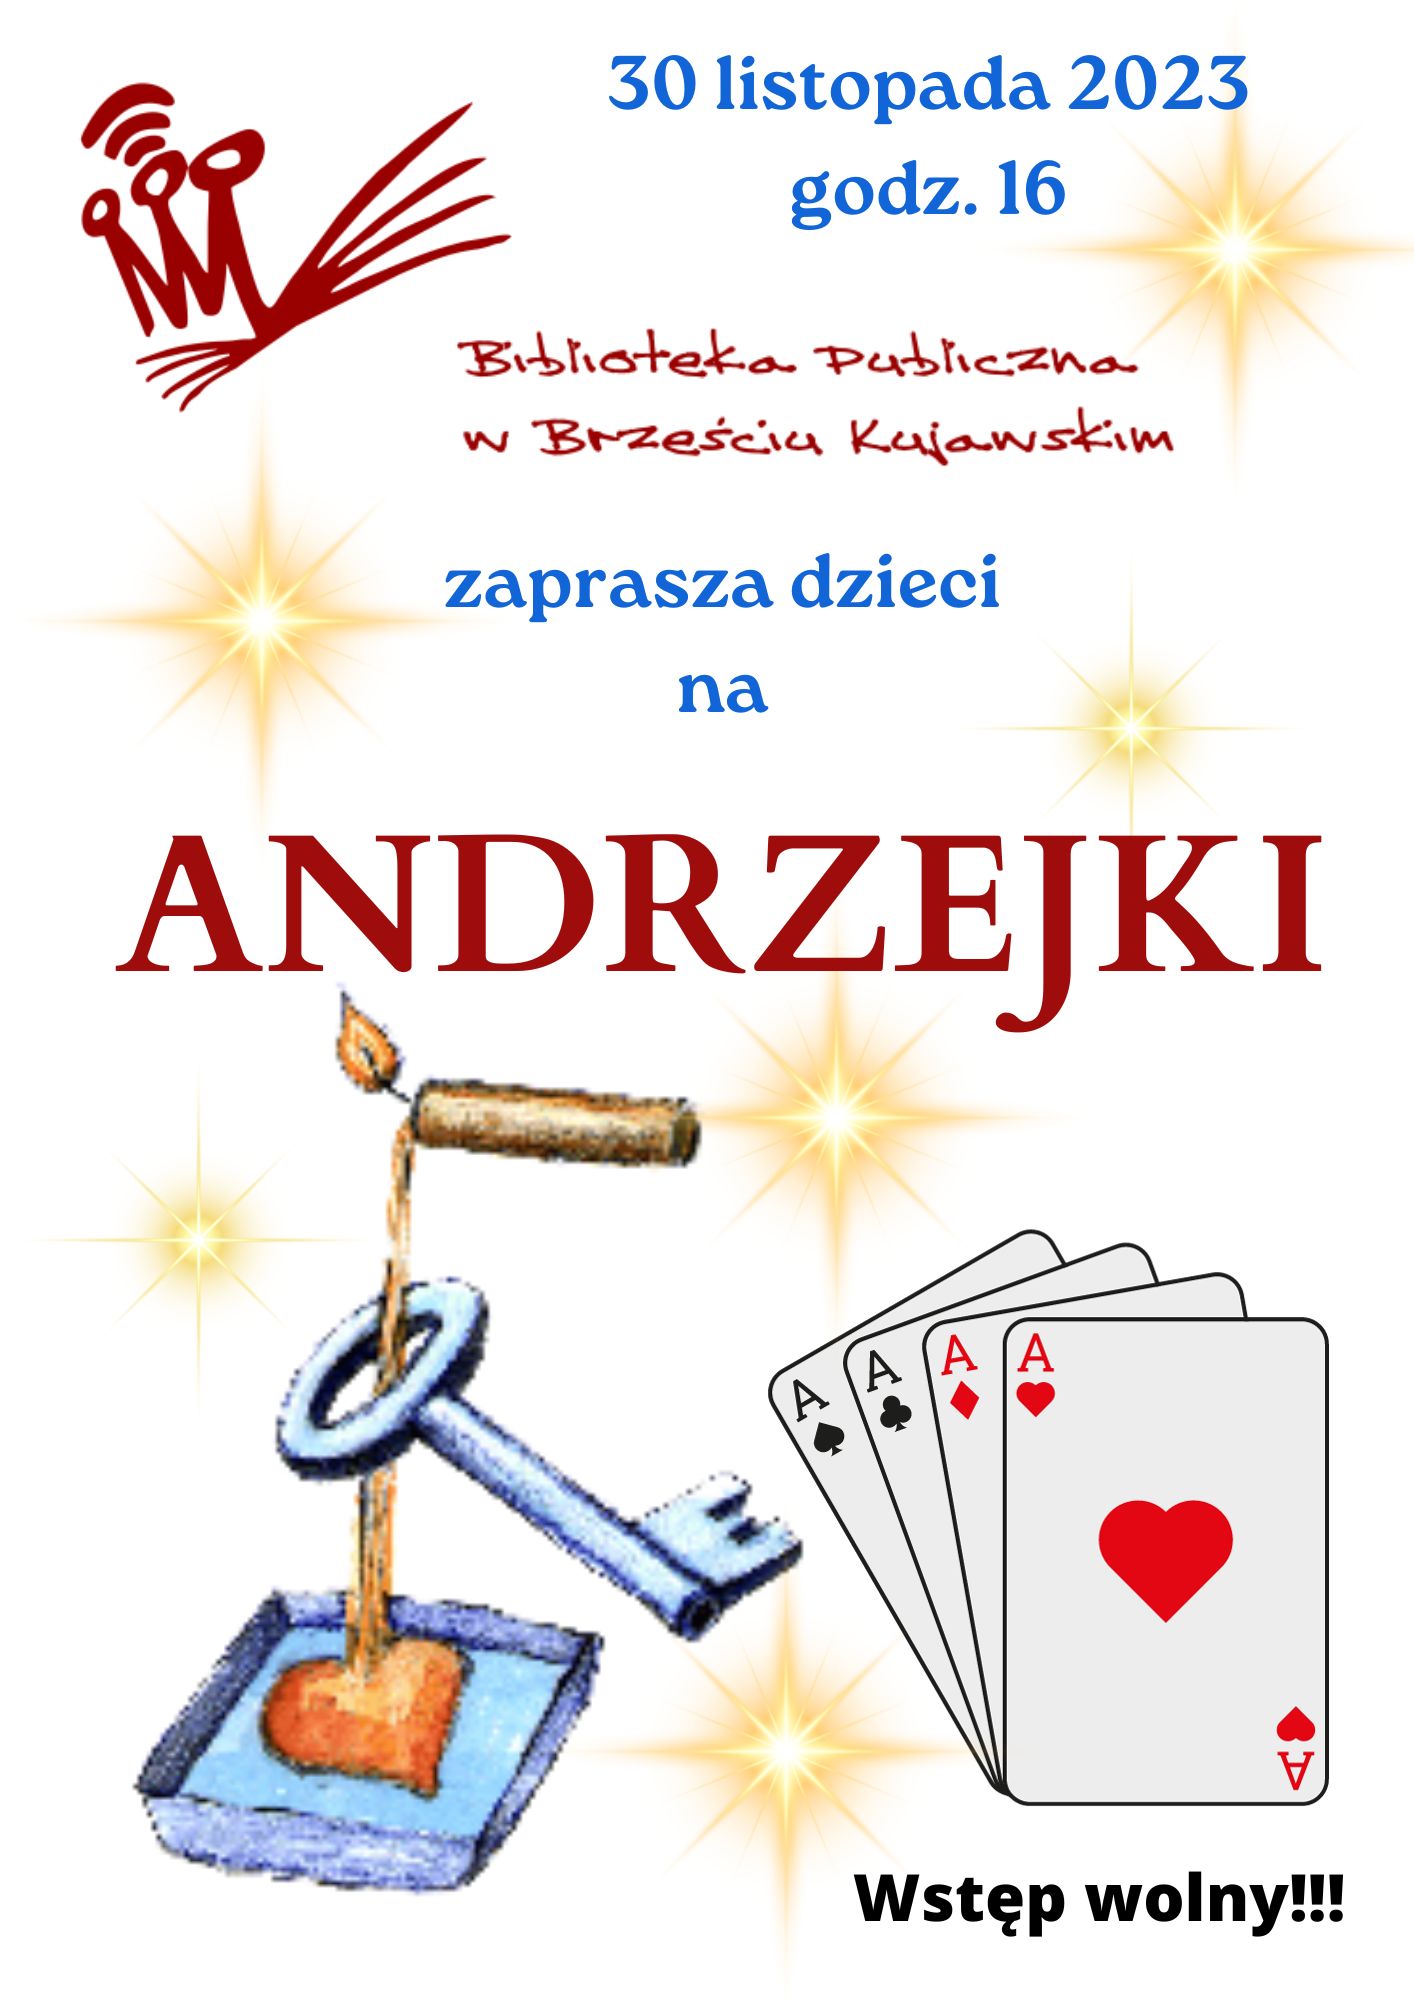 Andrzejki 2023.jpg